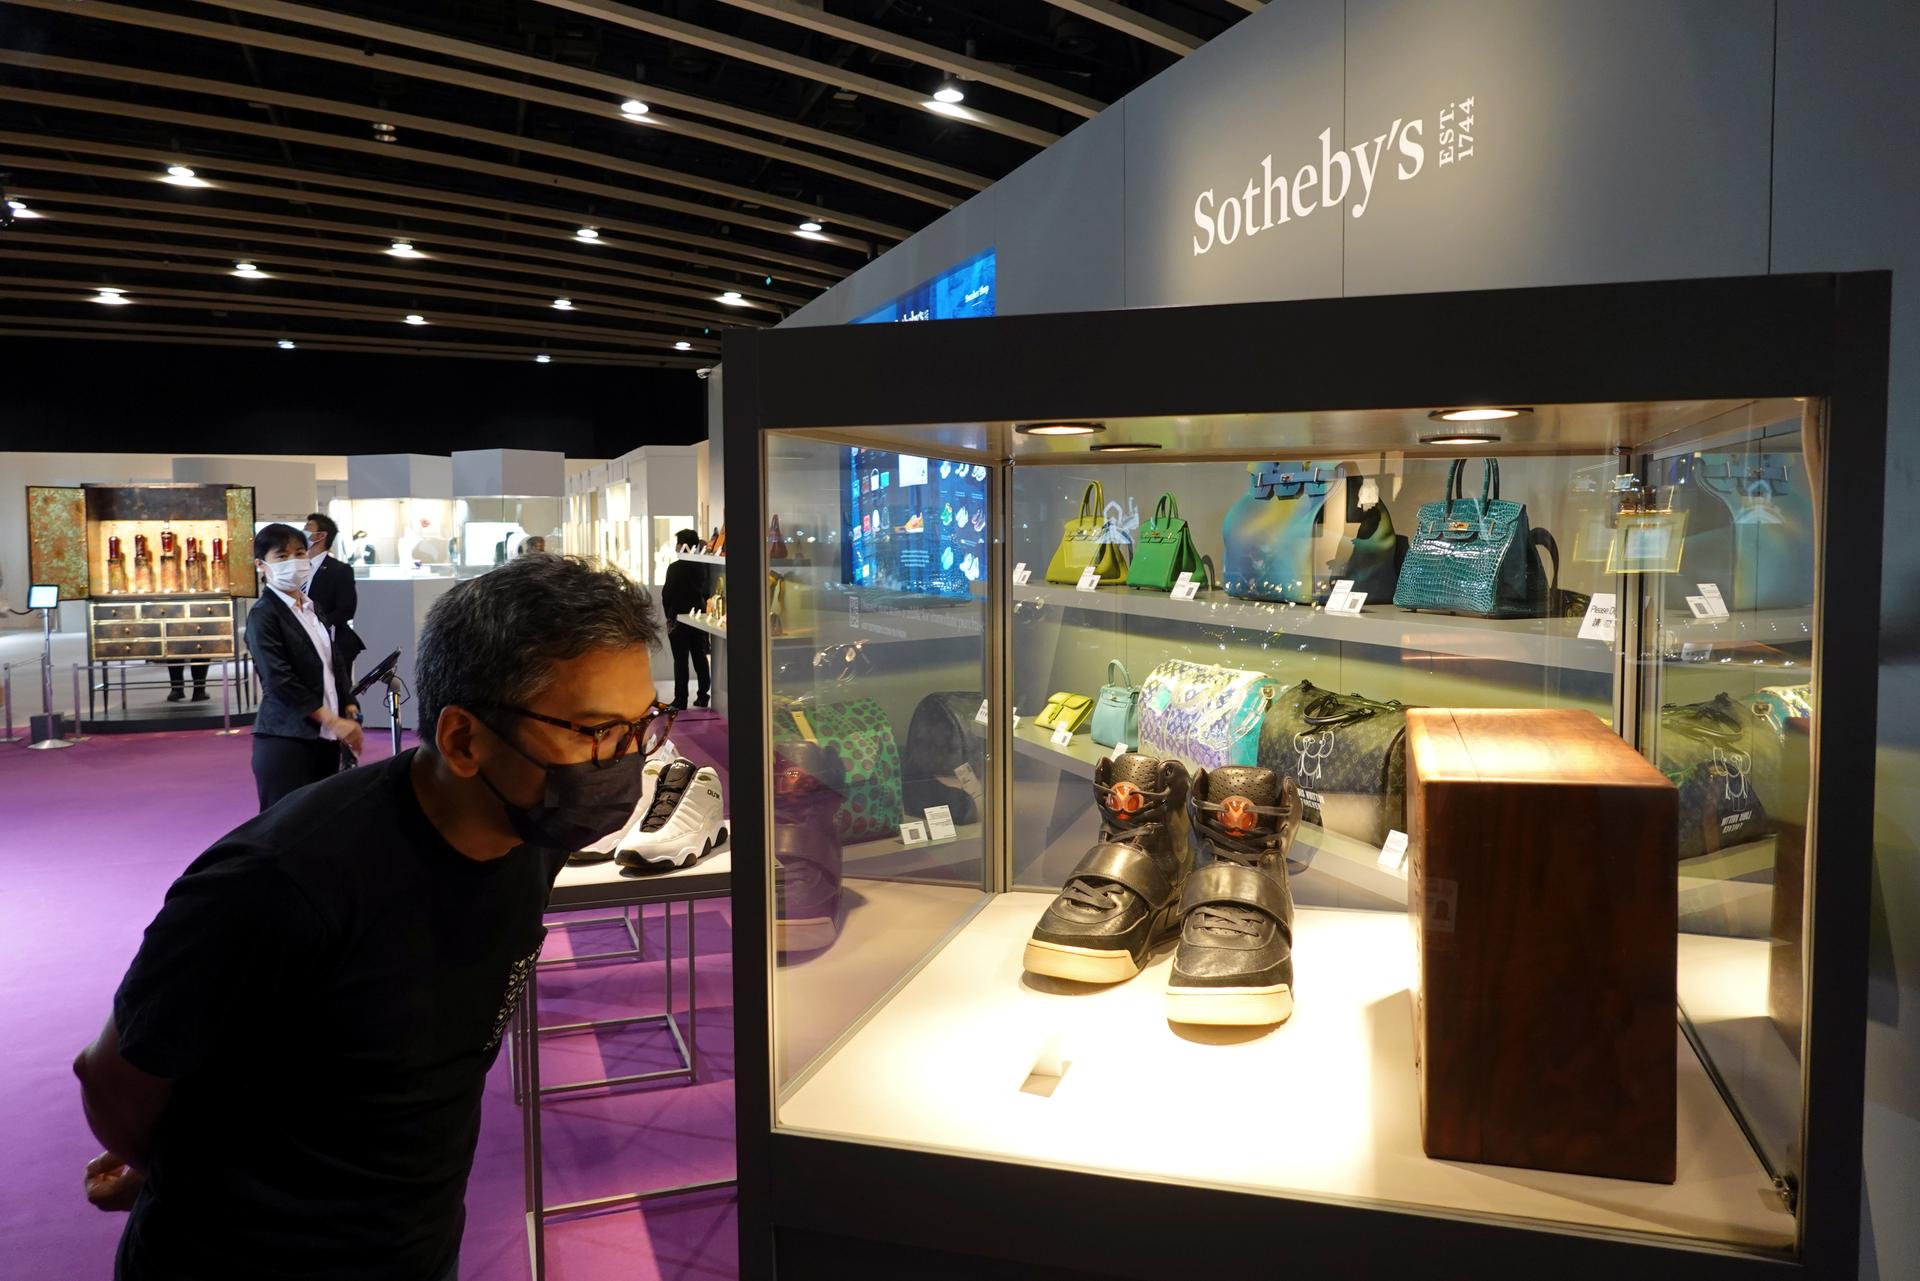 25 Most Expensive Sneakers Ever Sold: Game-Worn Jordans to Air Yeezy –  Footwear News